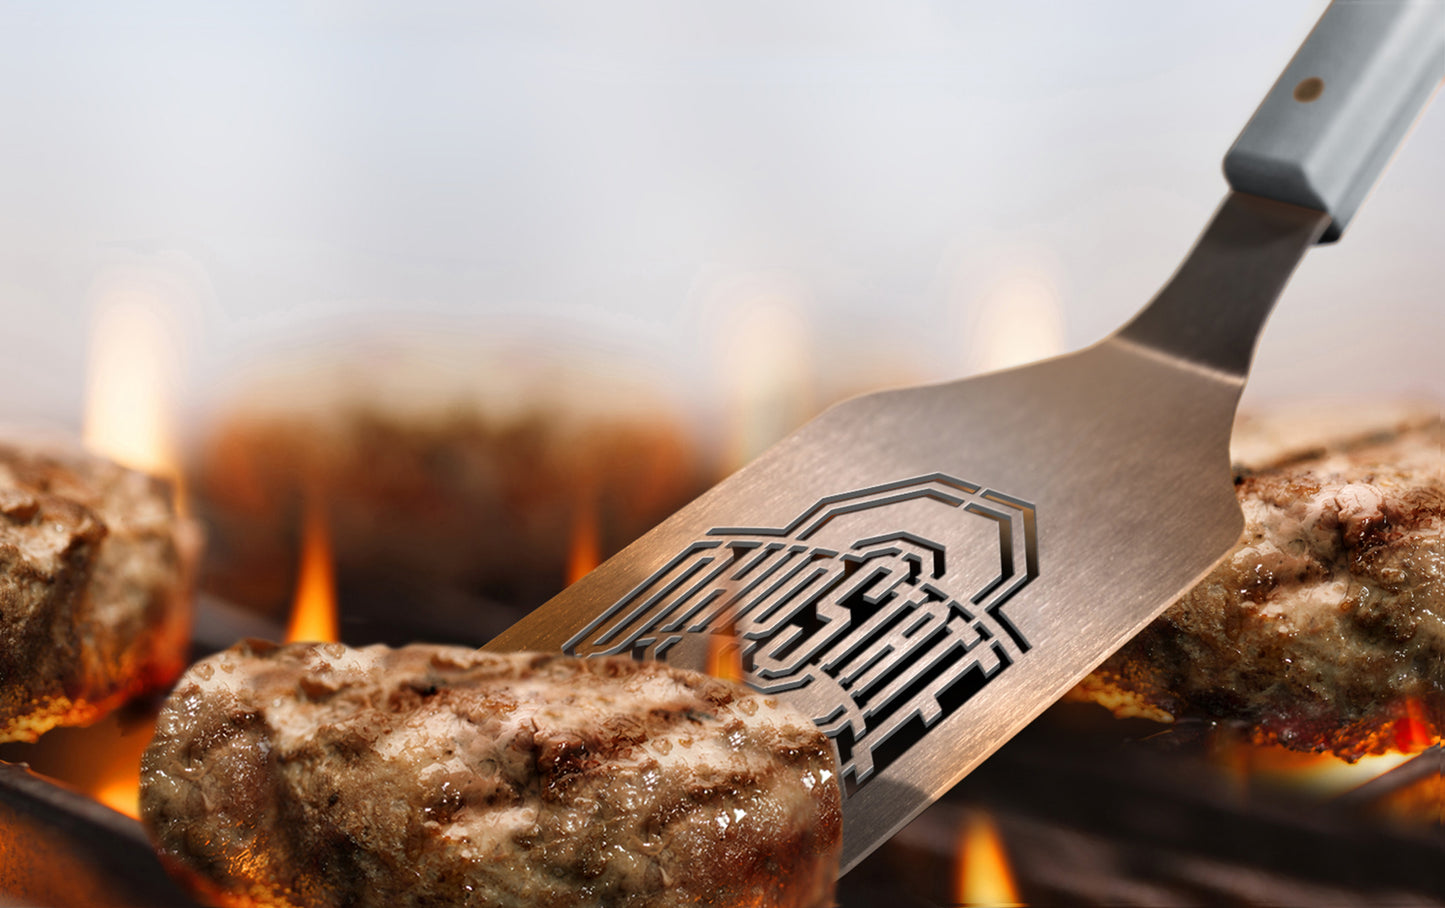 OHIO STATE BUCKEYES 3-PIECE SPORTULA BBQ UTENSIL SET